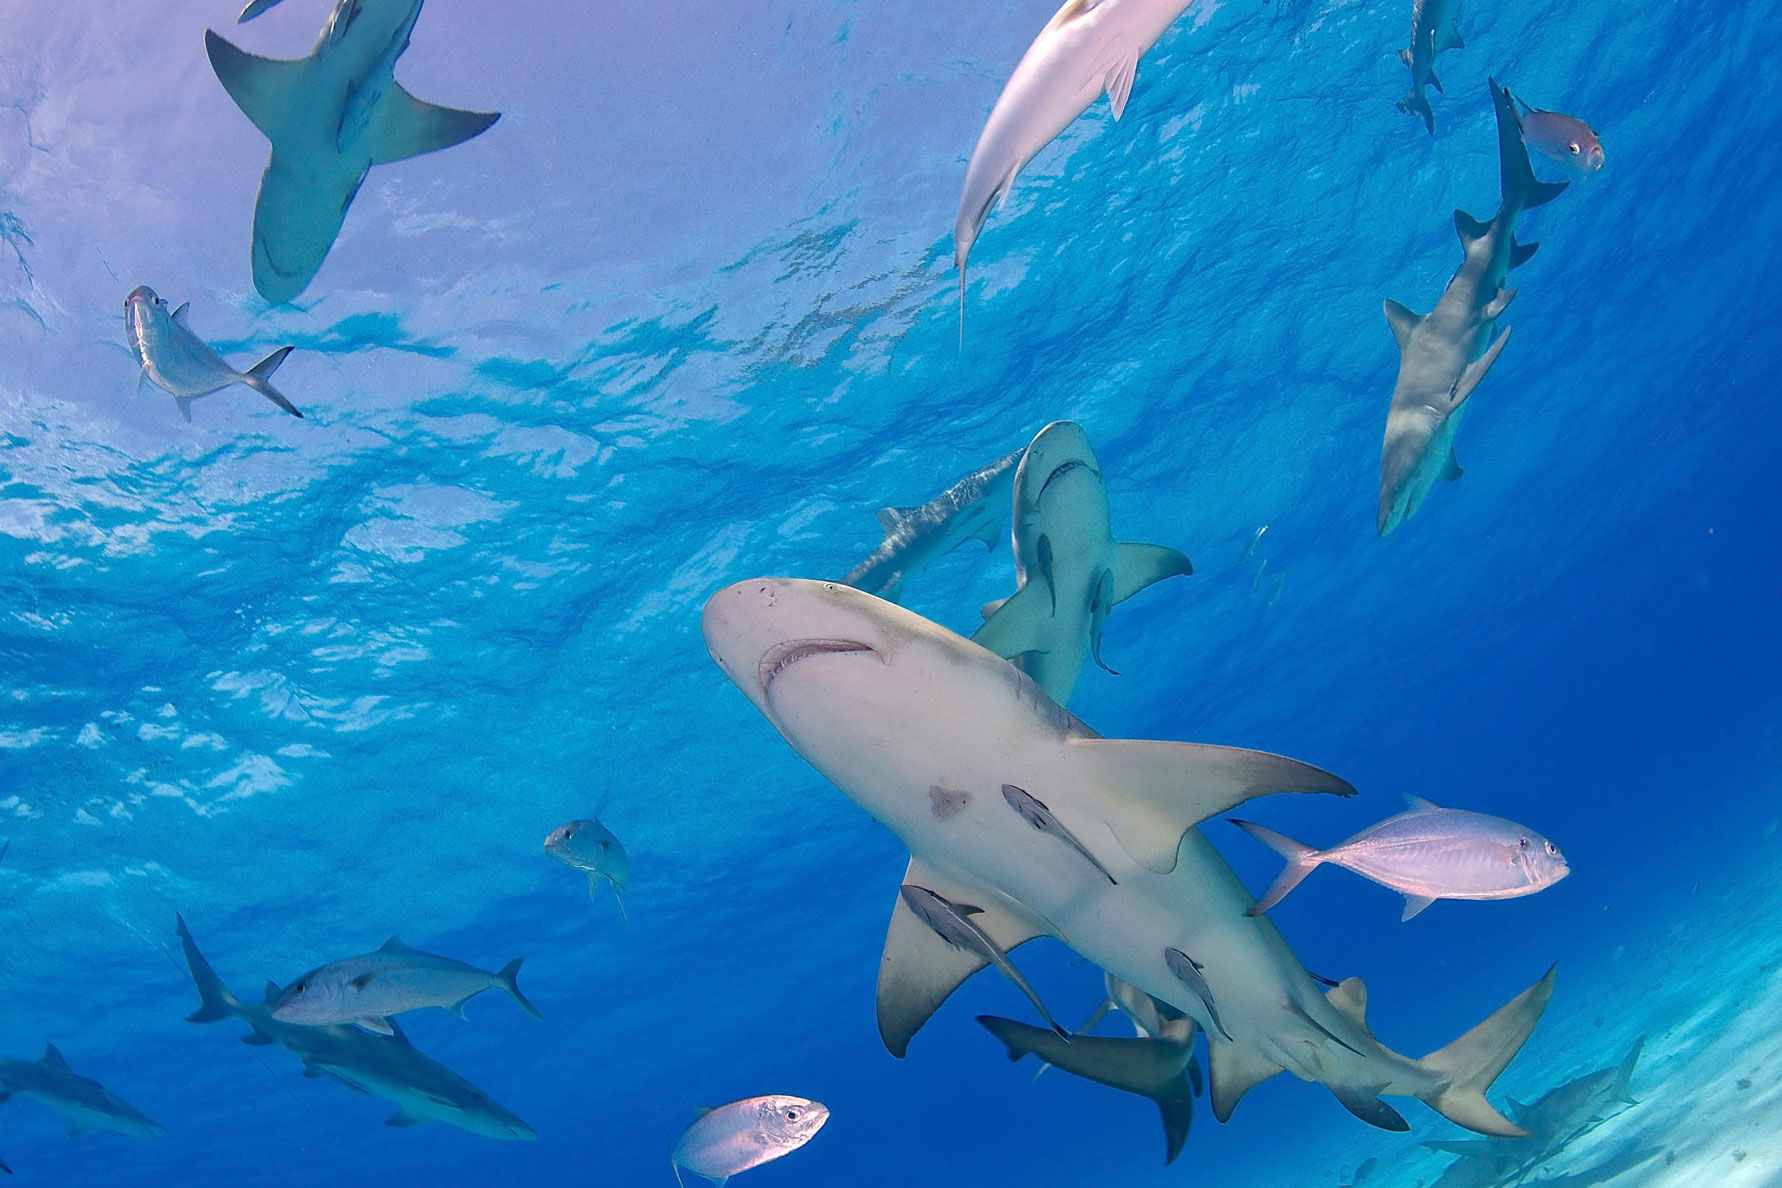 Shark - Bahamas Aggressor